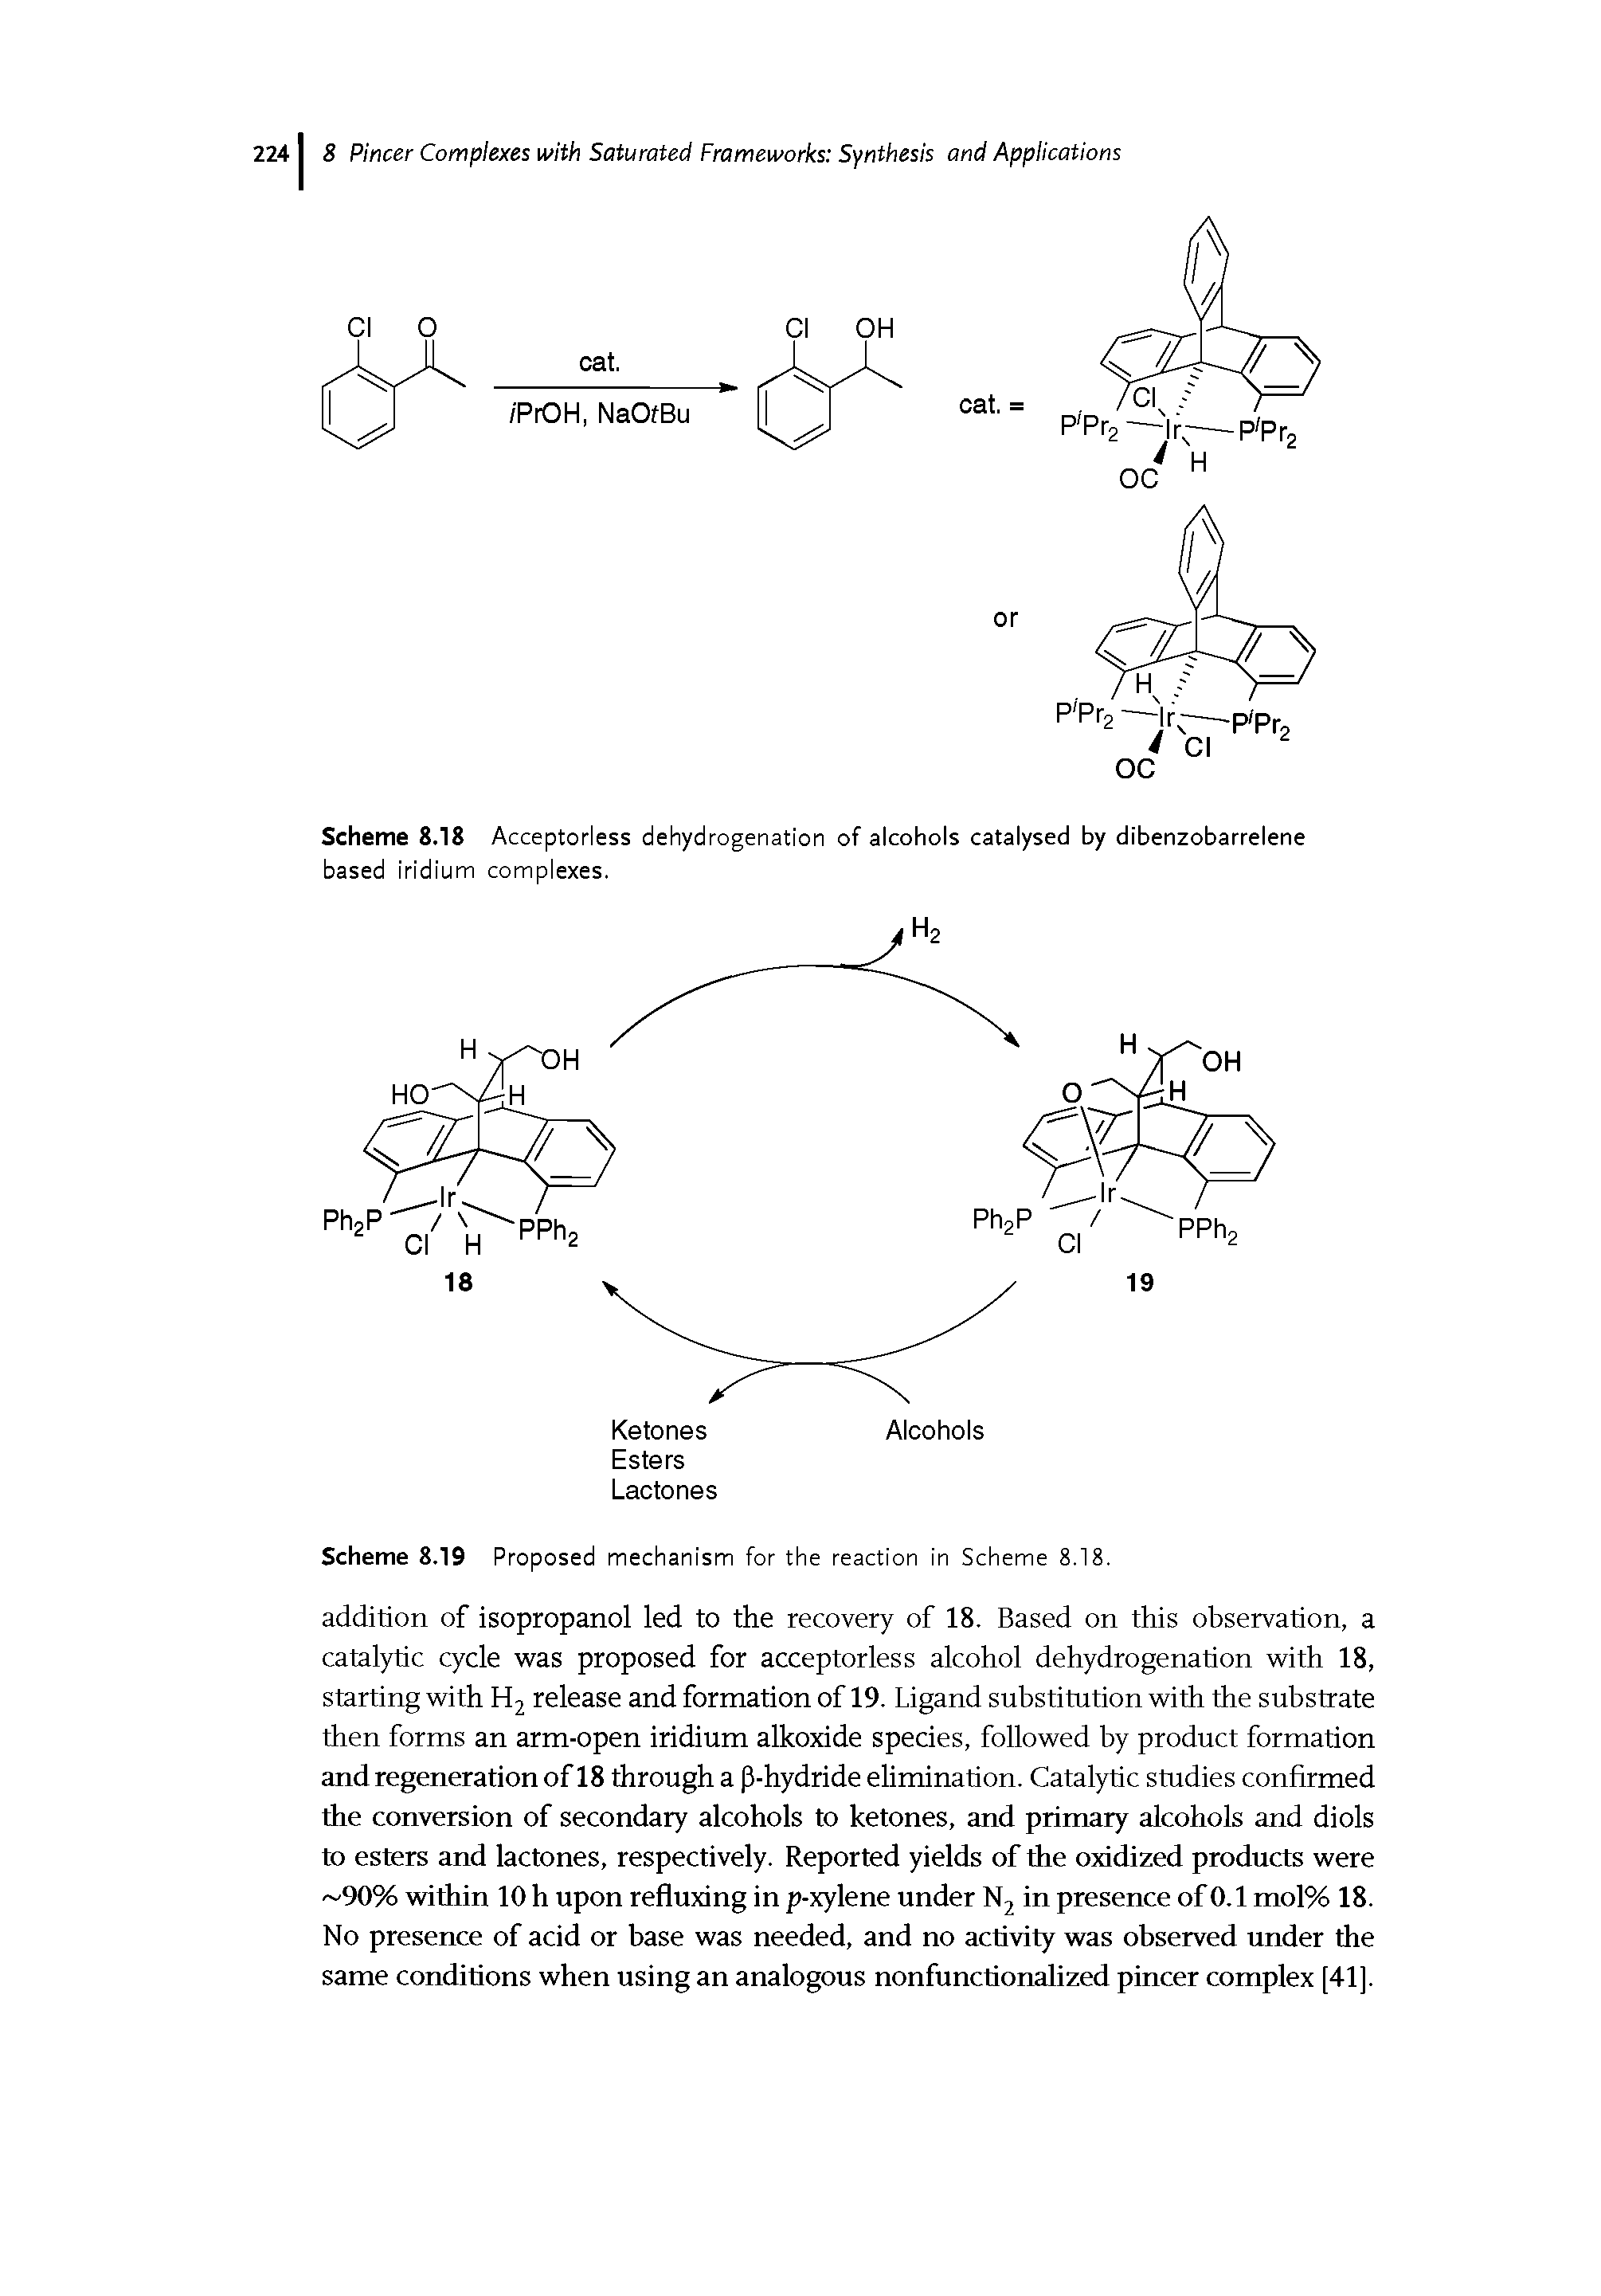 Scheme 8.18 Acceptorless dehydrogenation of alcohols catalysed by dibenzobarrelene based iridium complexes.